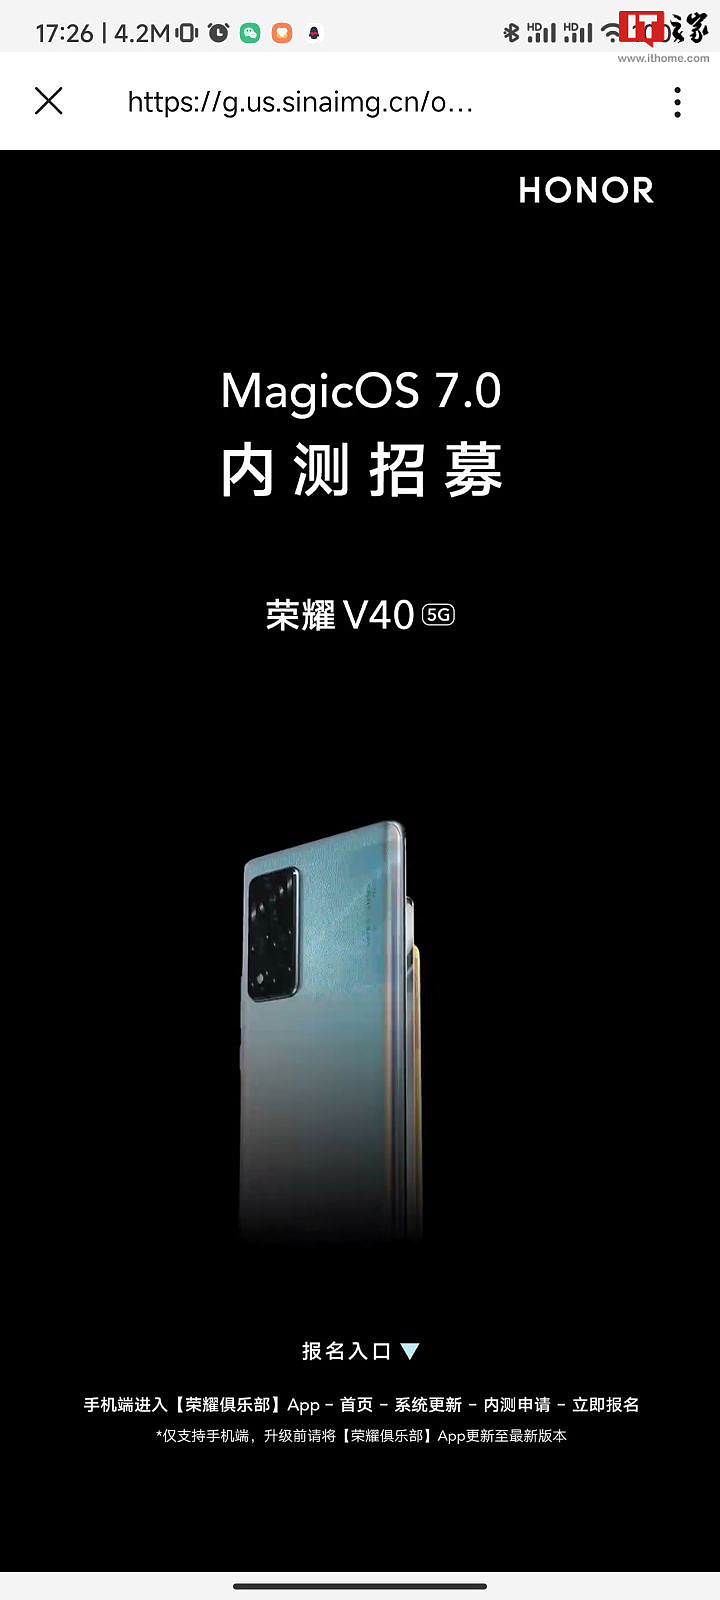 荣耀 V40、Magic3/4 / V 系列手机开启 MagicOS 7.0 内测招募 - 1